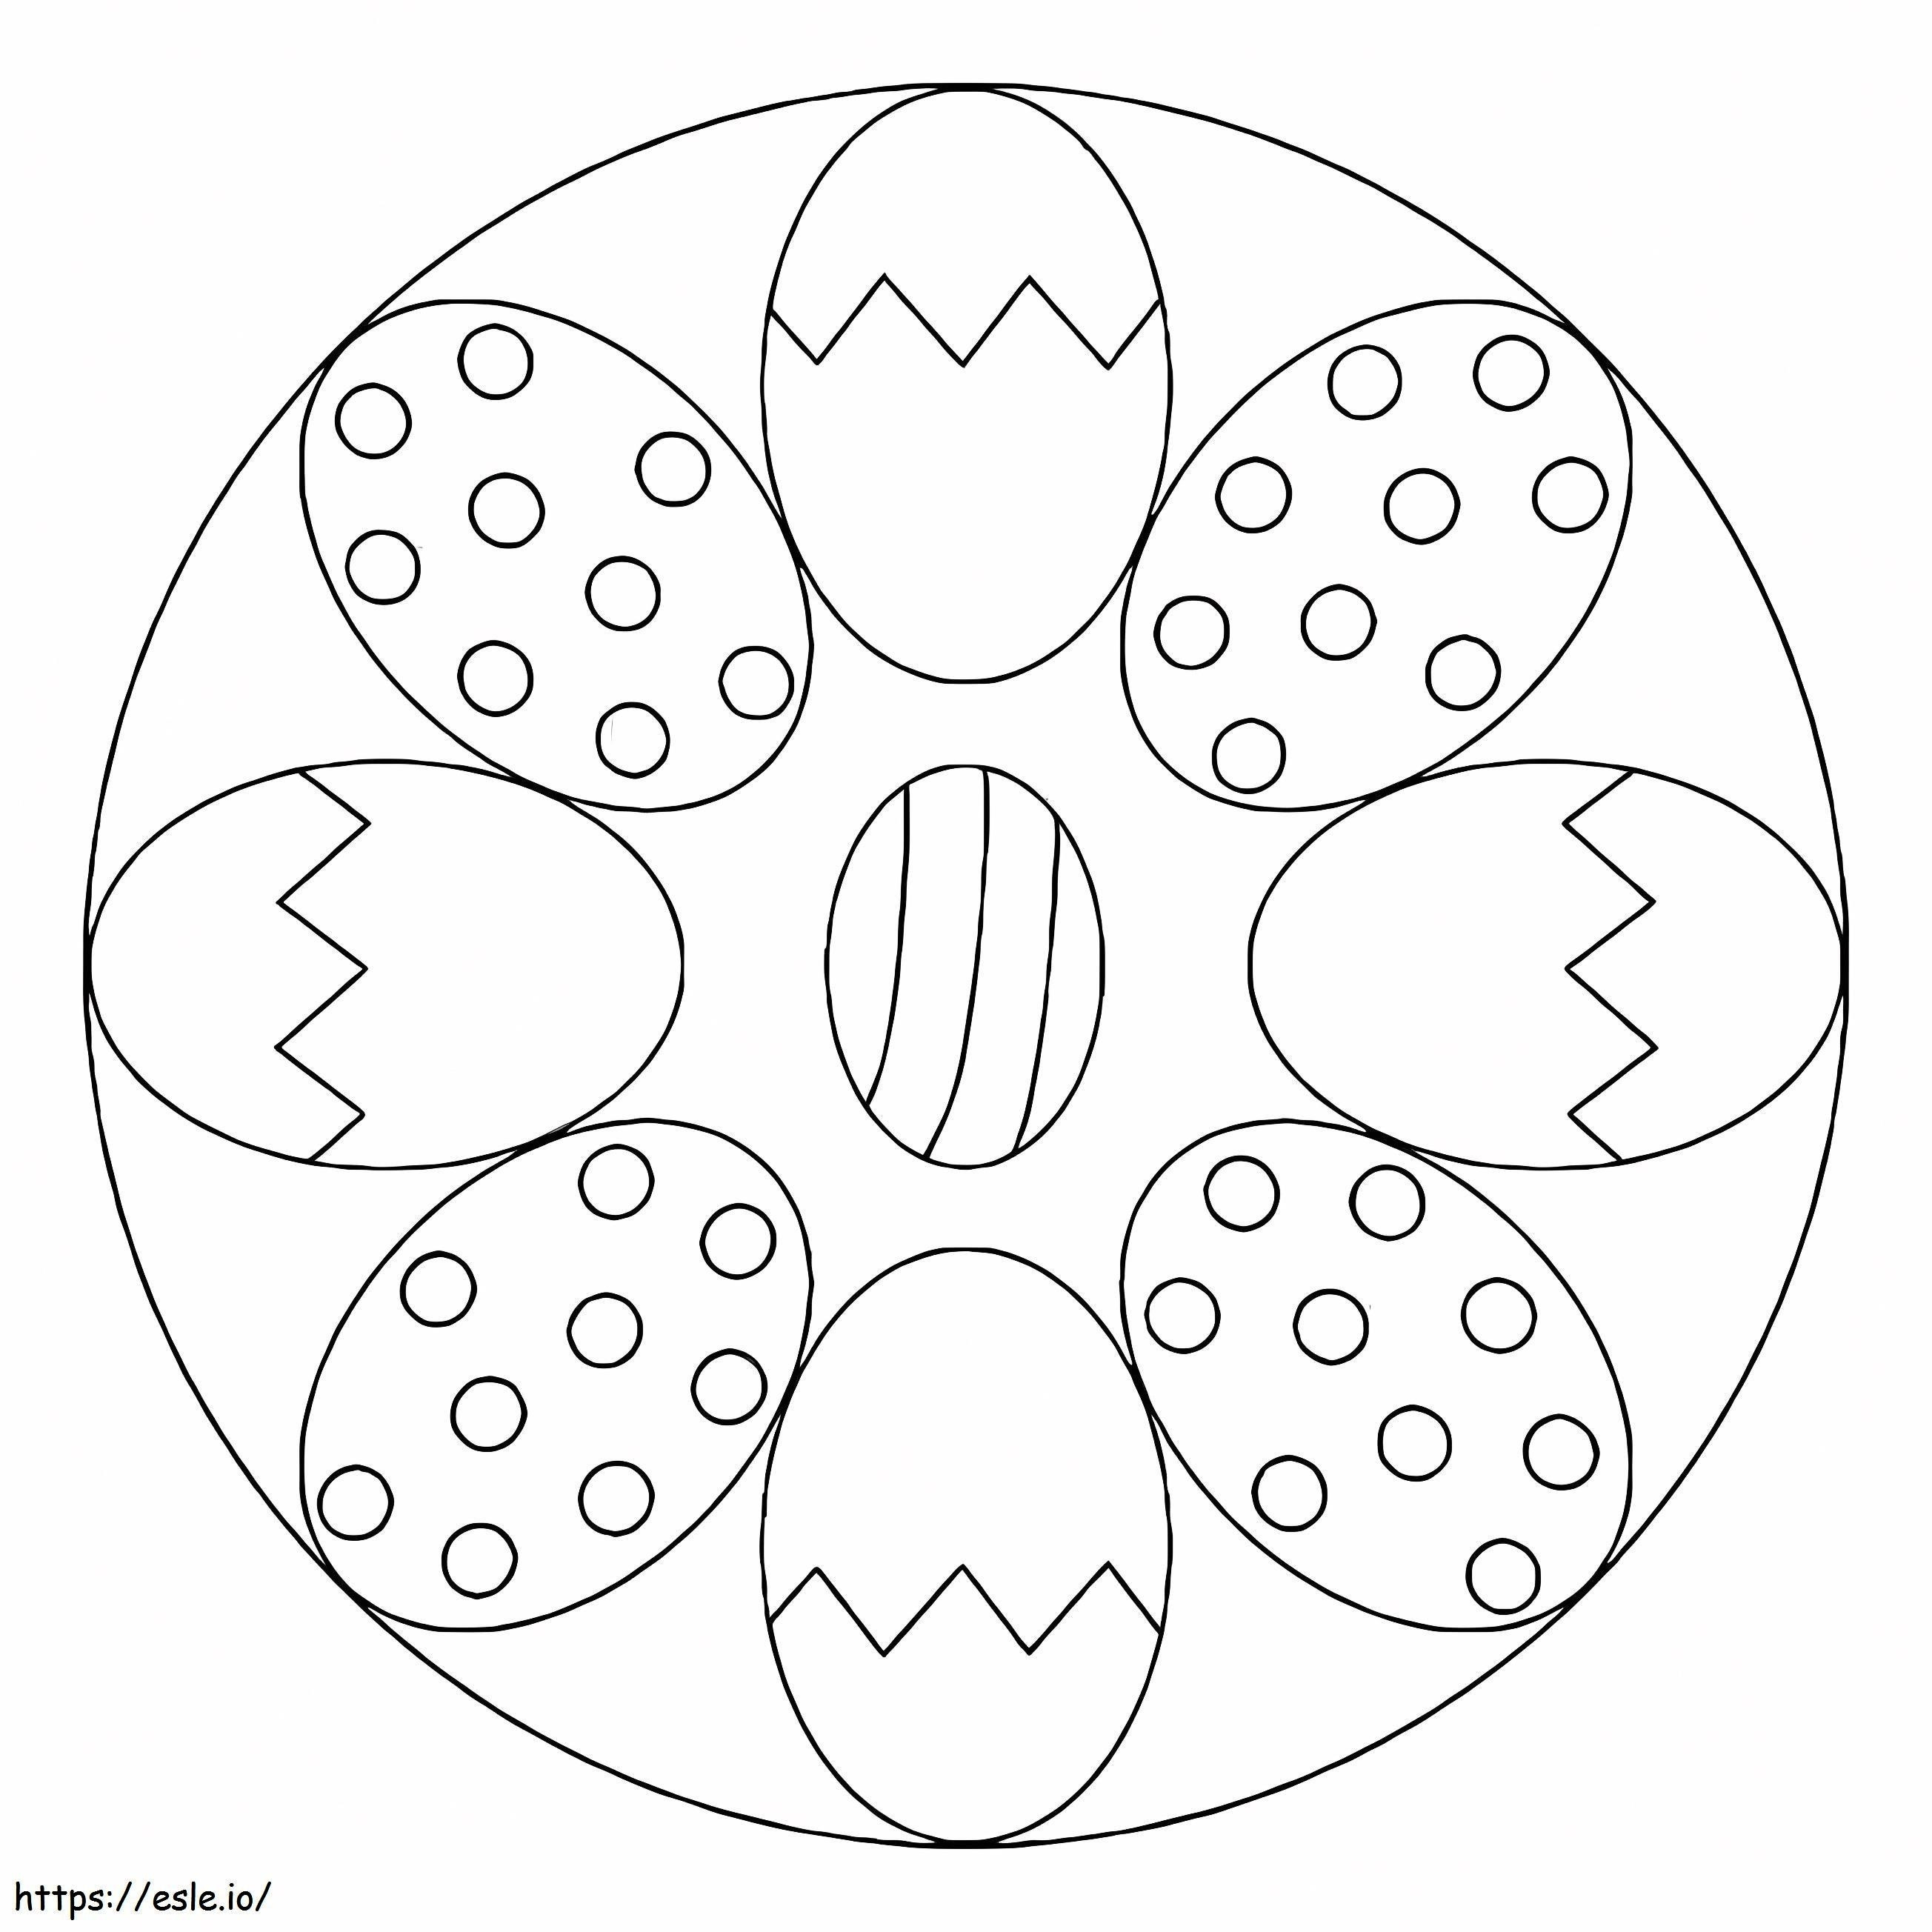 Mandala de Ovos de Páscoa 1 para colorir